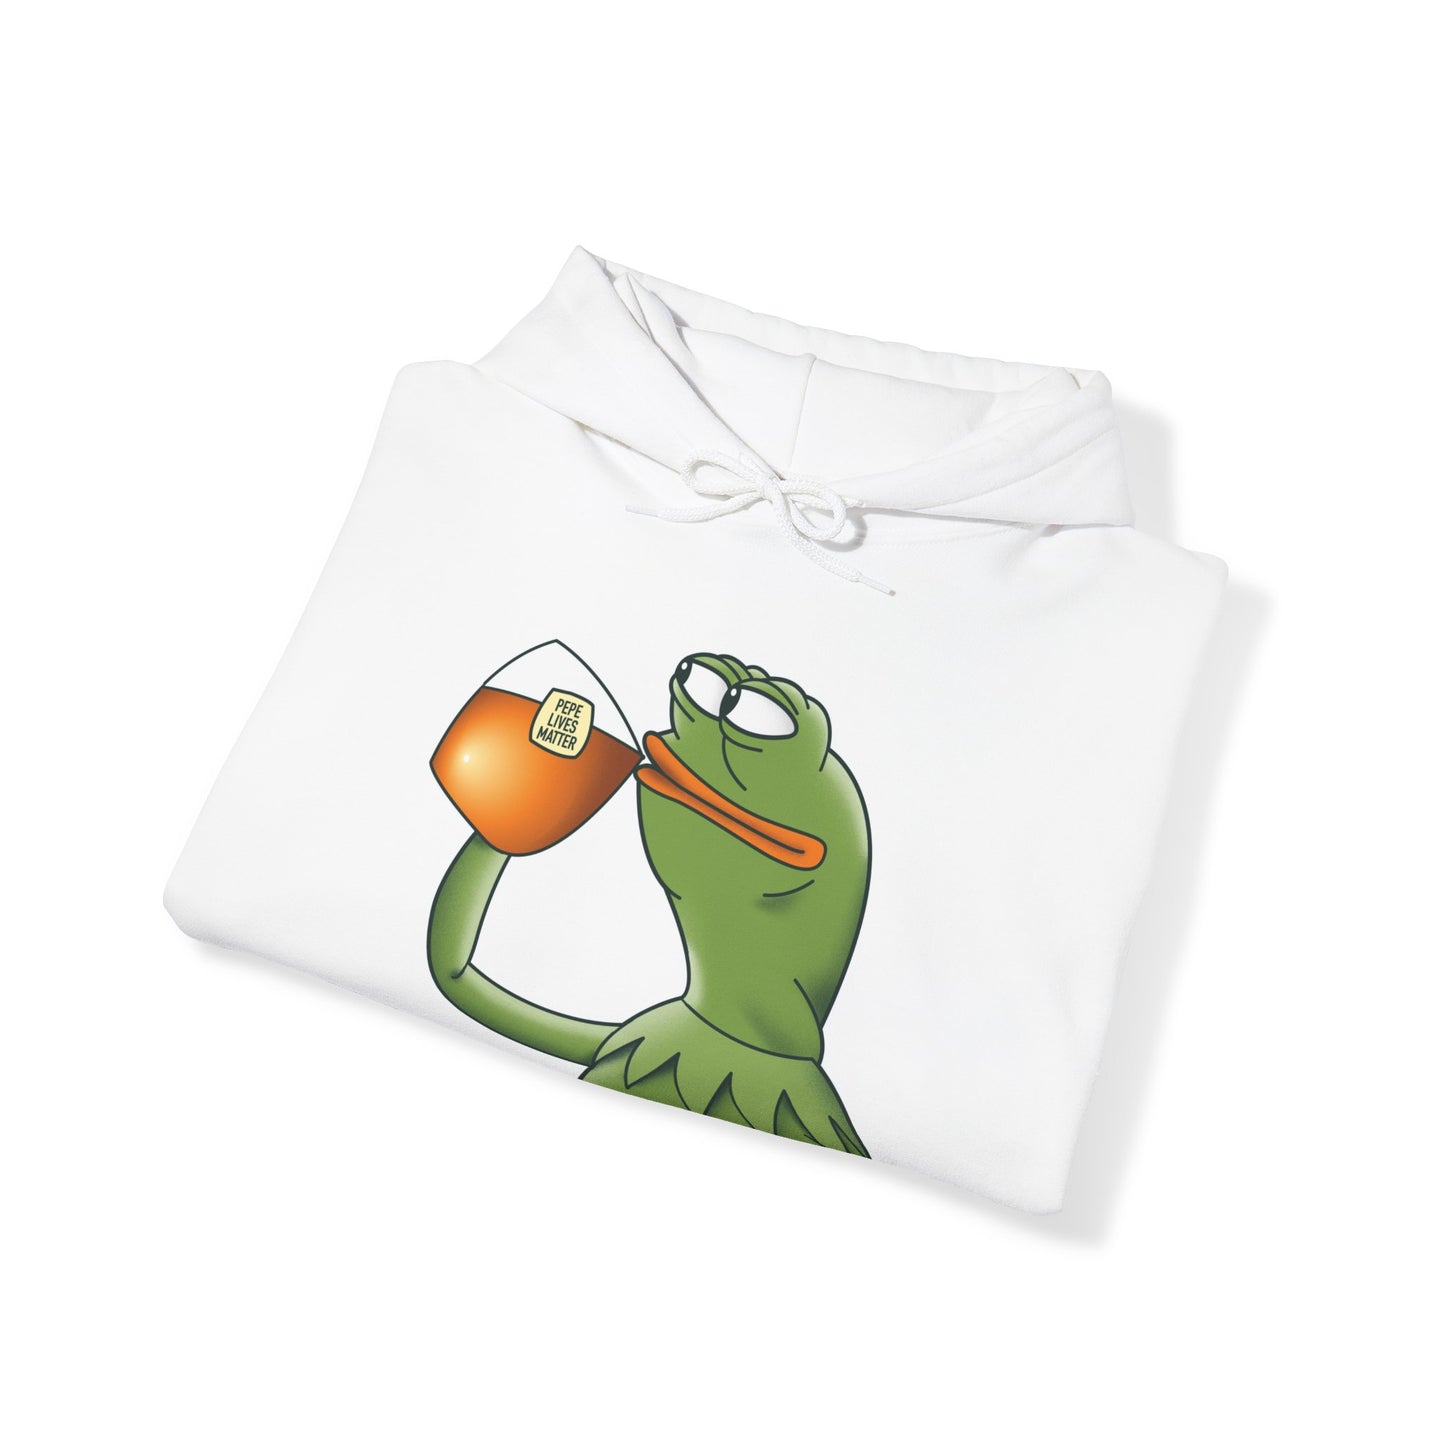 Pepe Lives Matter Sweatshirt